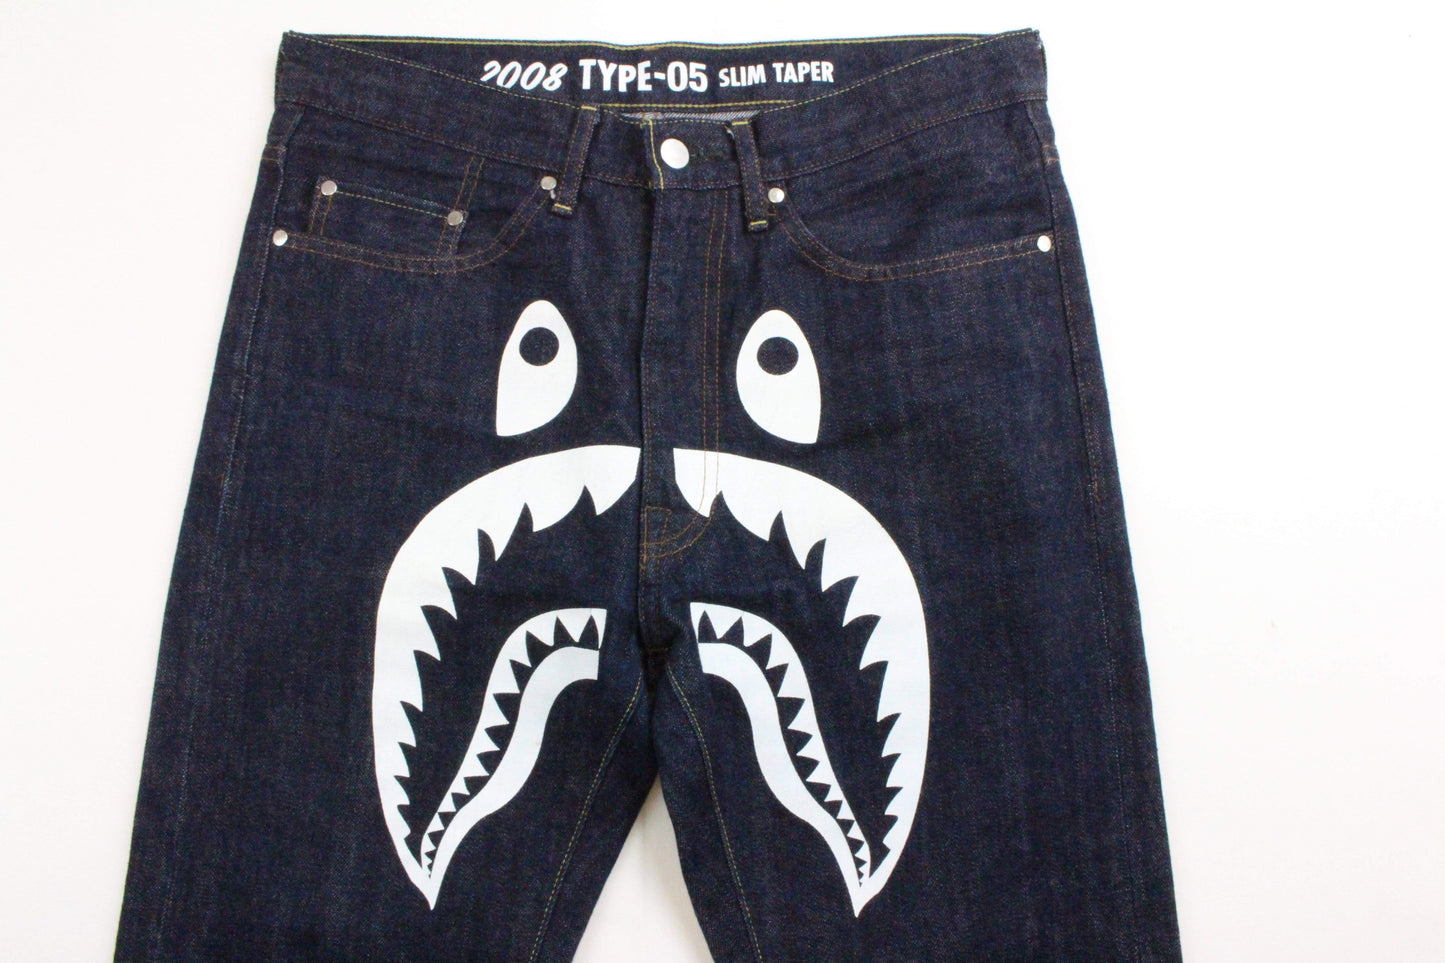 Bape Shark Face Dark Blue Denim Jeans - SaruGeneral